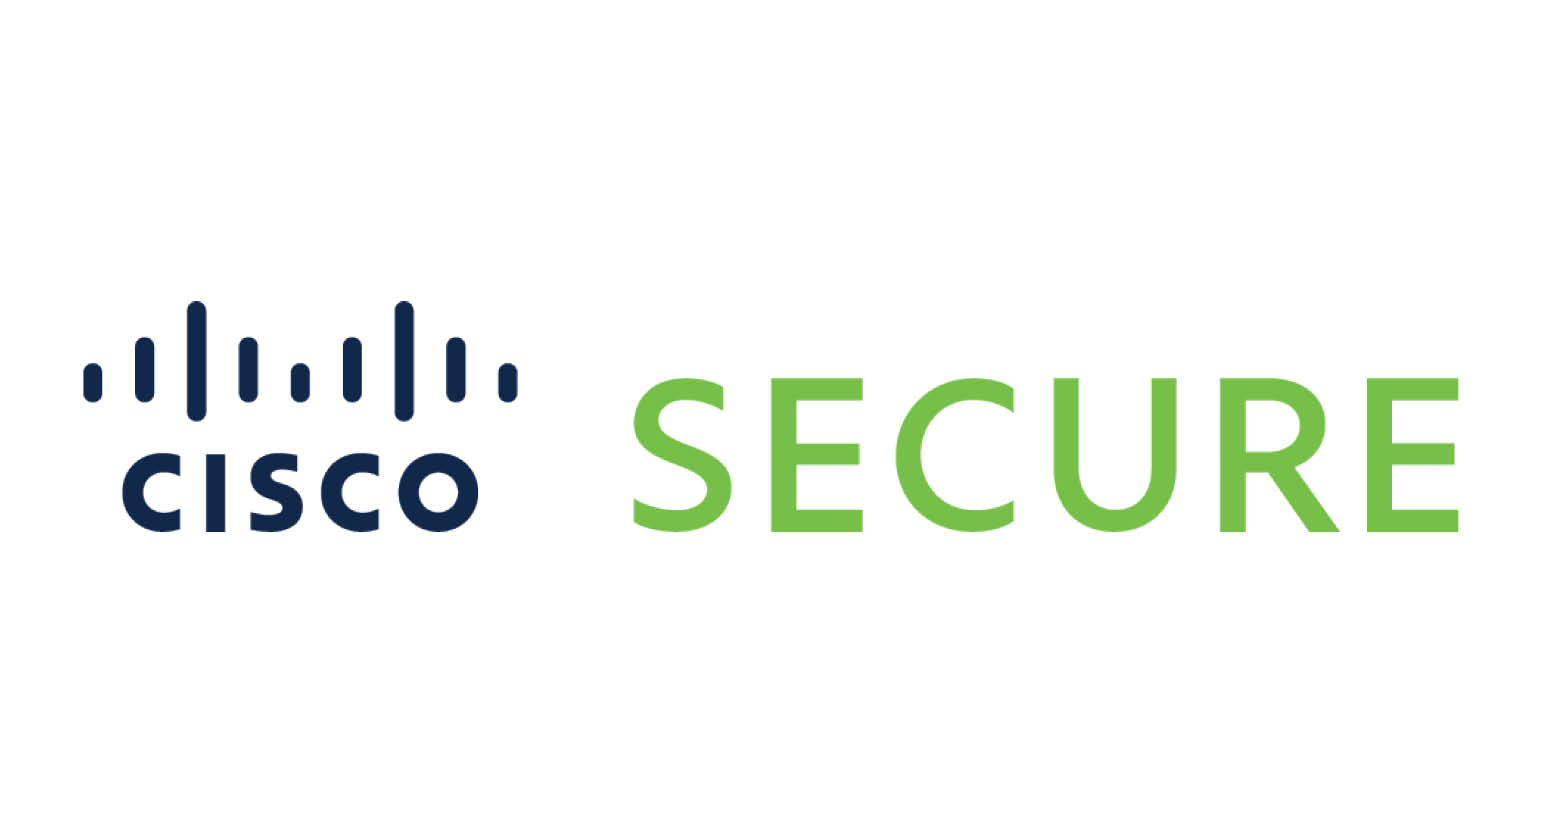 Cisco_Secure.jpg